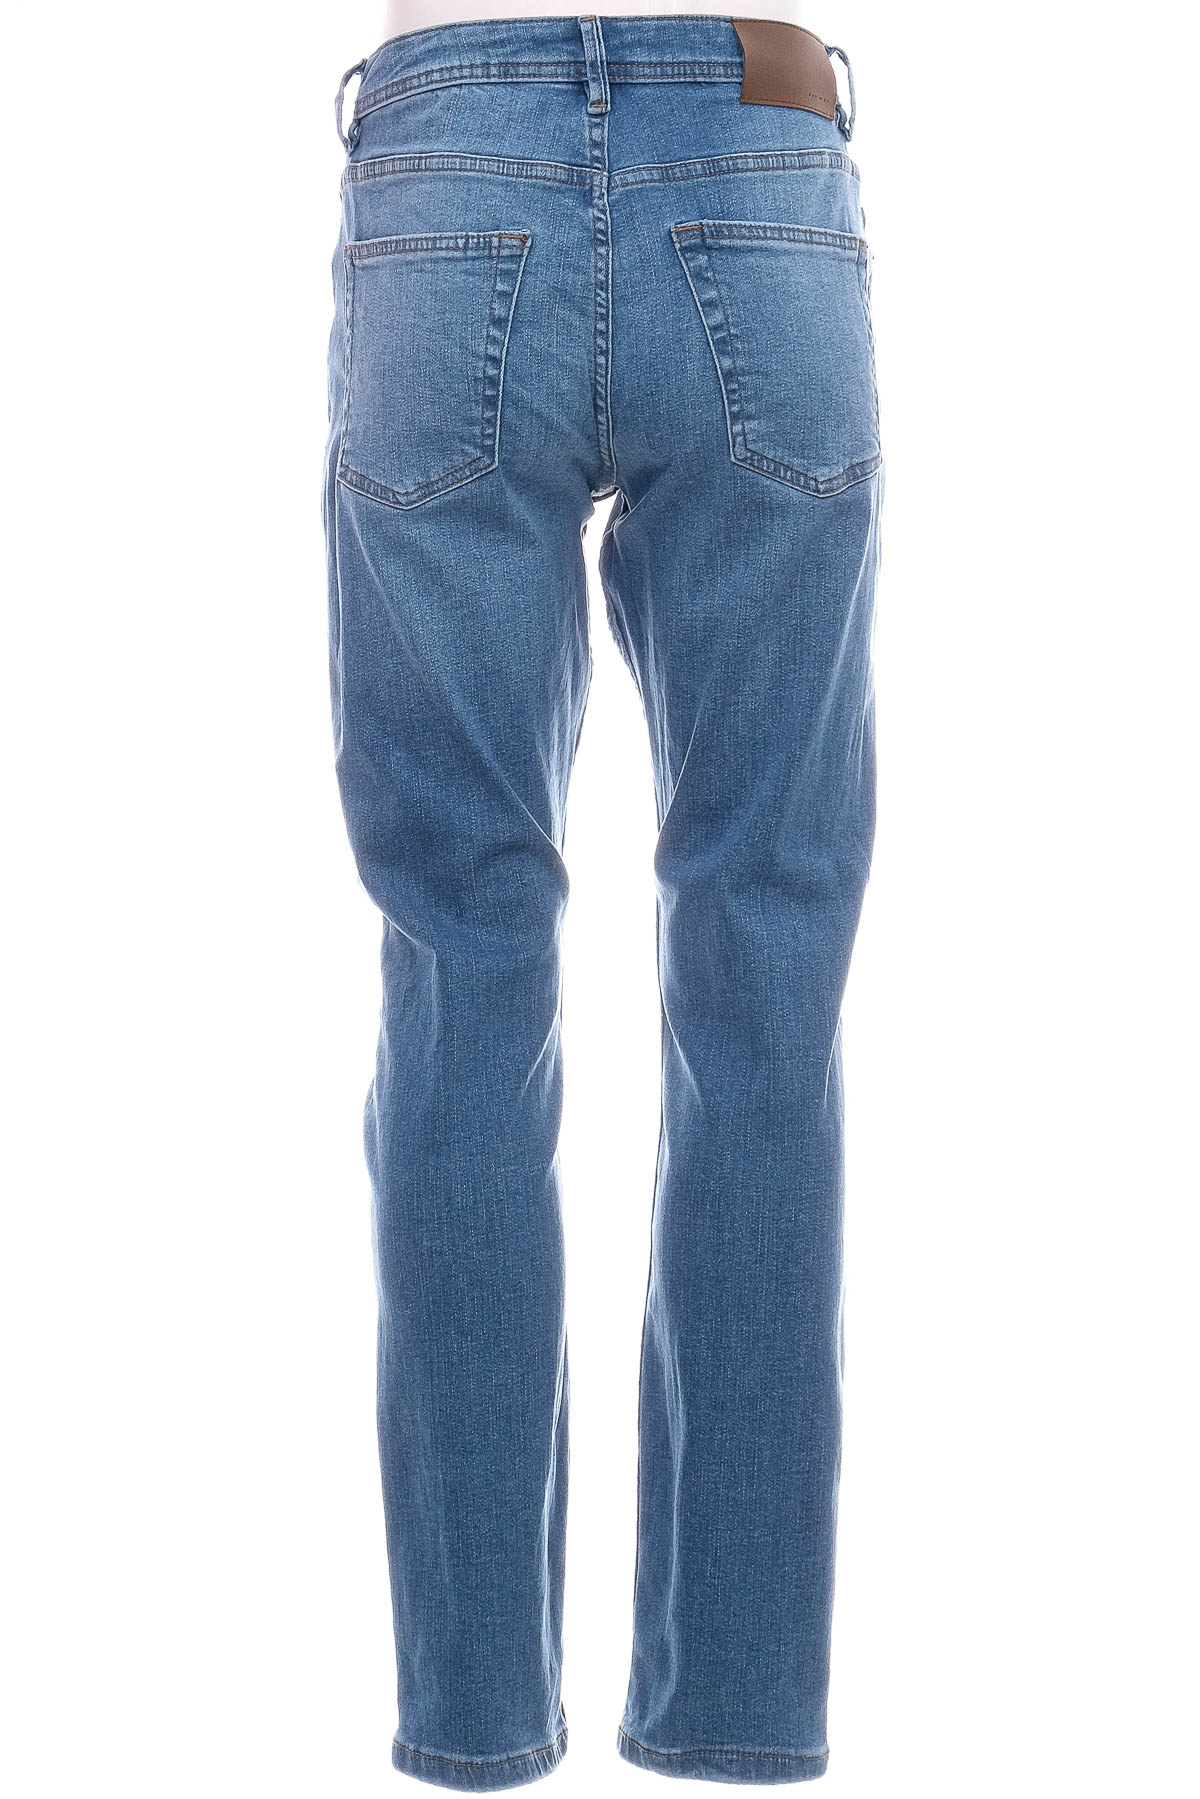 Men's jeans - Denim & Co - 1